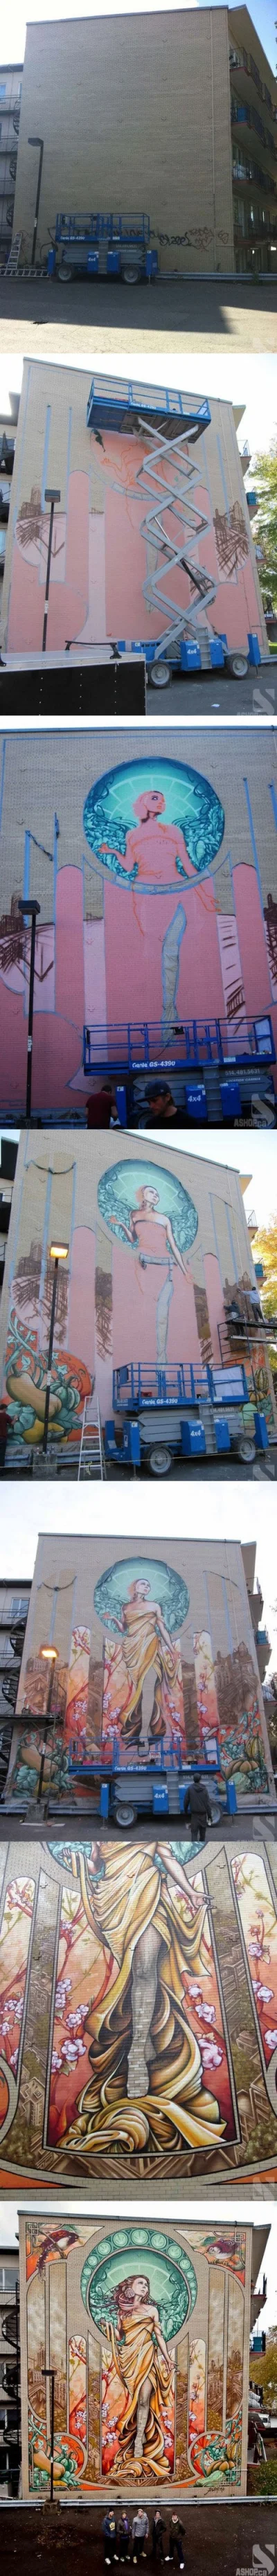 kawayo - Tak powstaje mural



#street #mural #sztuka